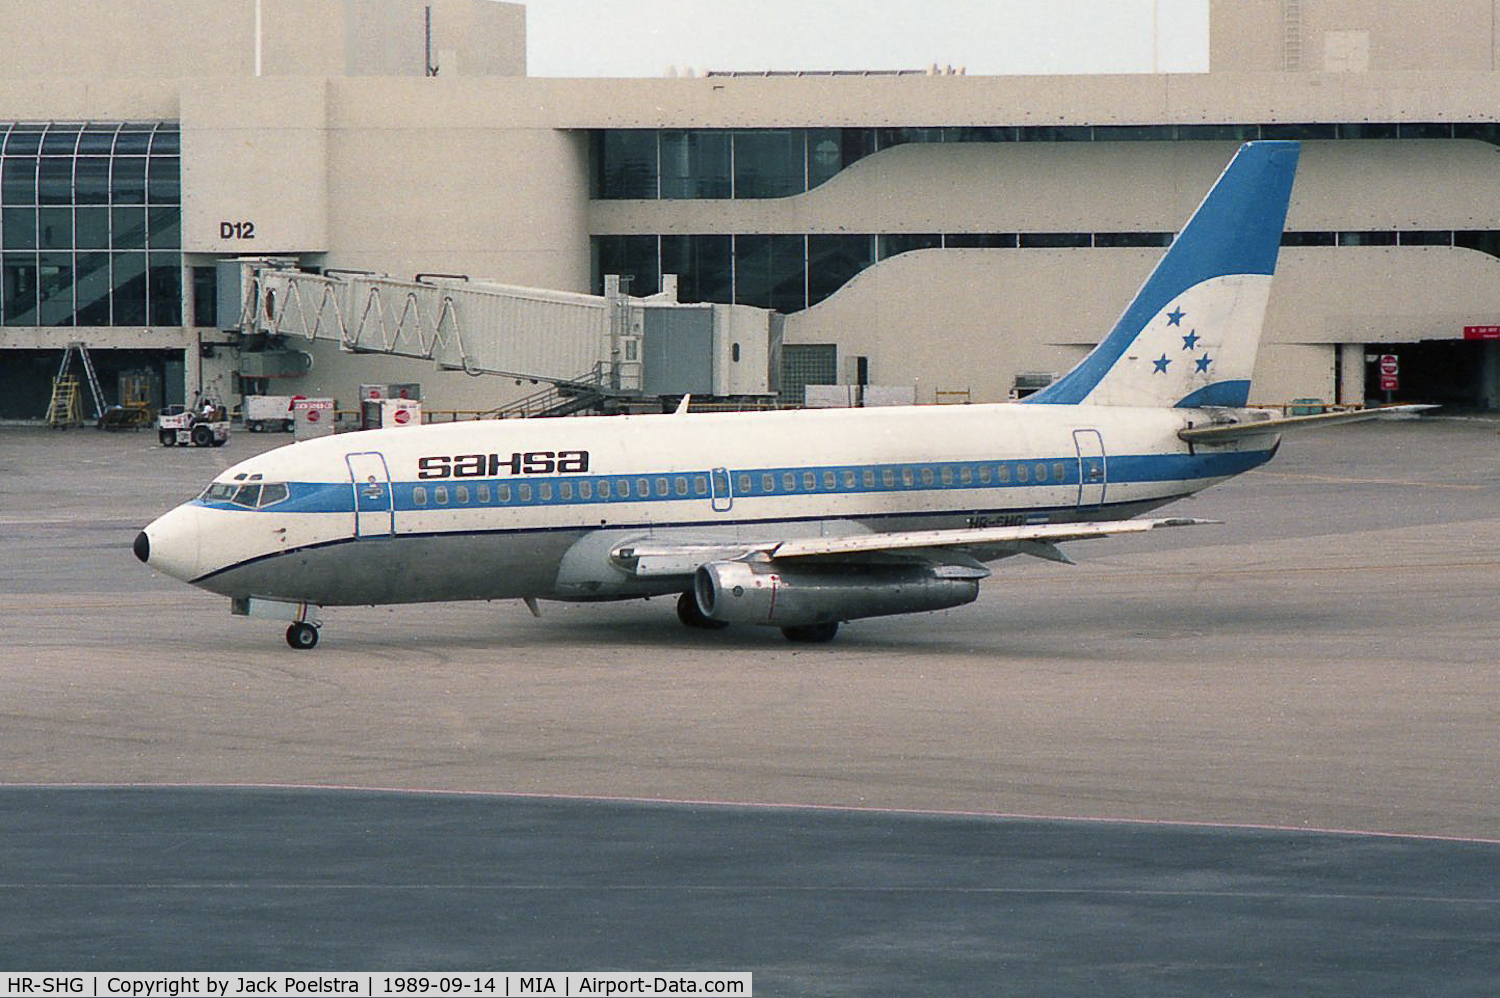 HR-SHG, 1968 Boeing 737-214 C/N 19921, HR-SHG at Miami airport